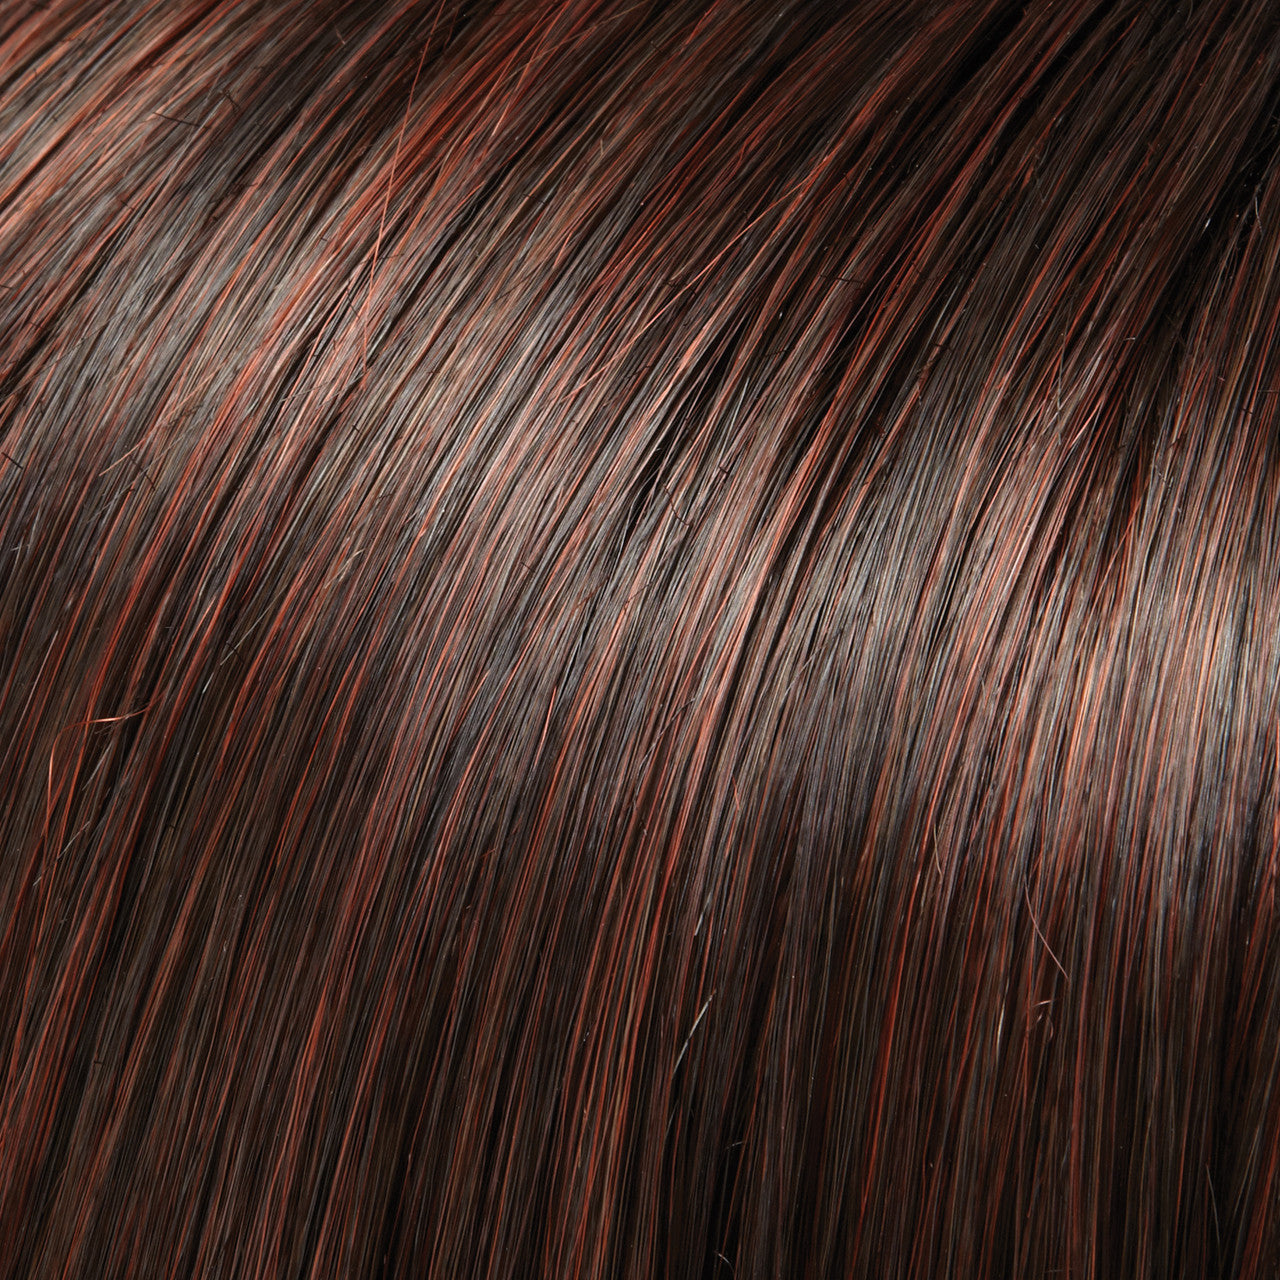 Drew a Synthetic Lace Front Wig Mono Top by Jon Renau